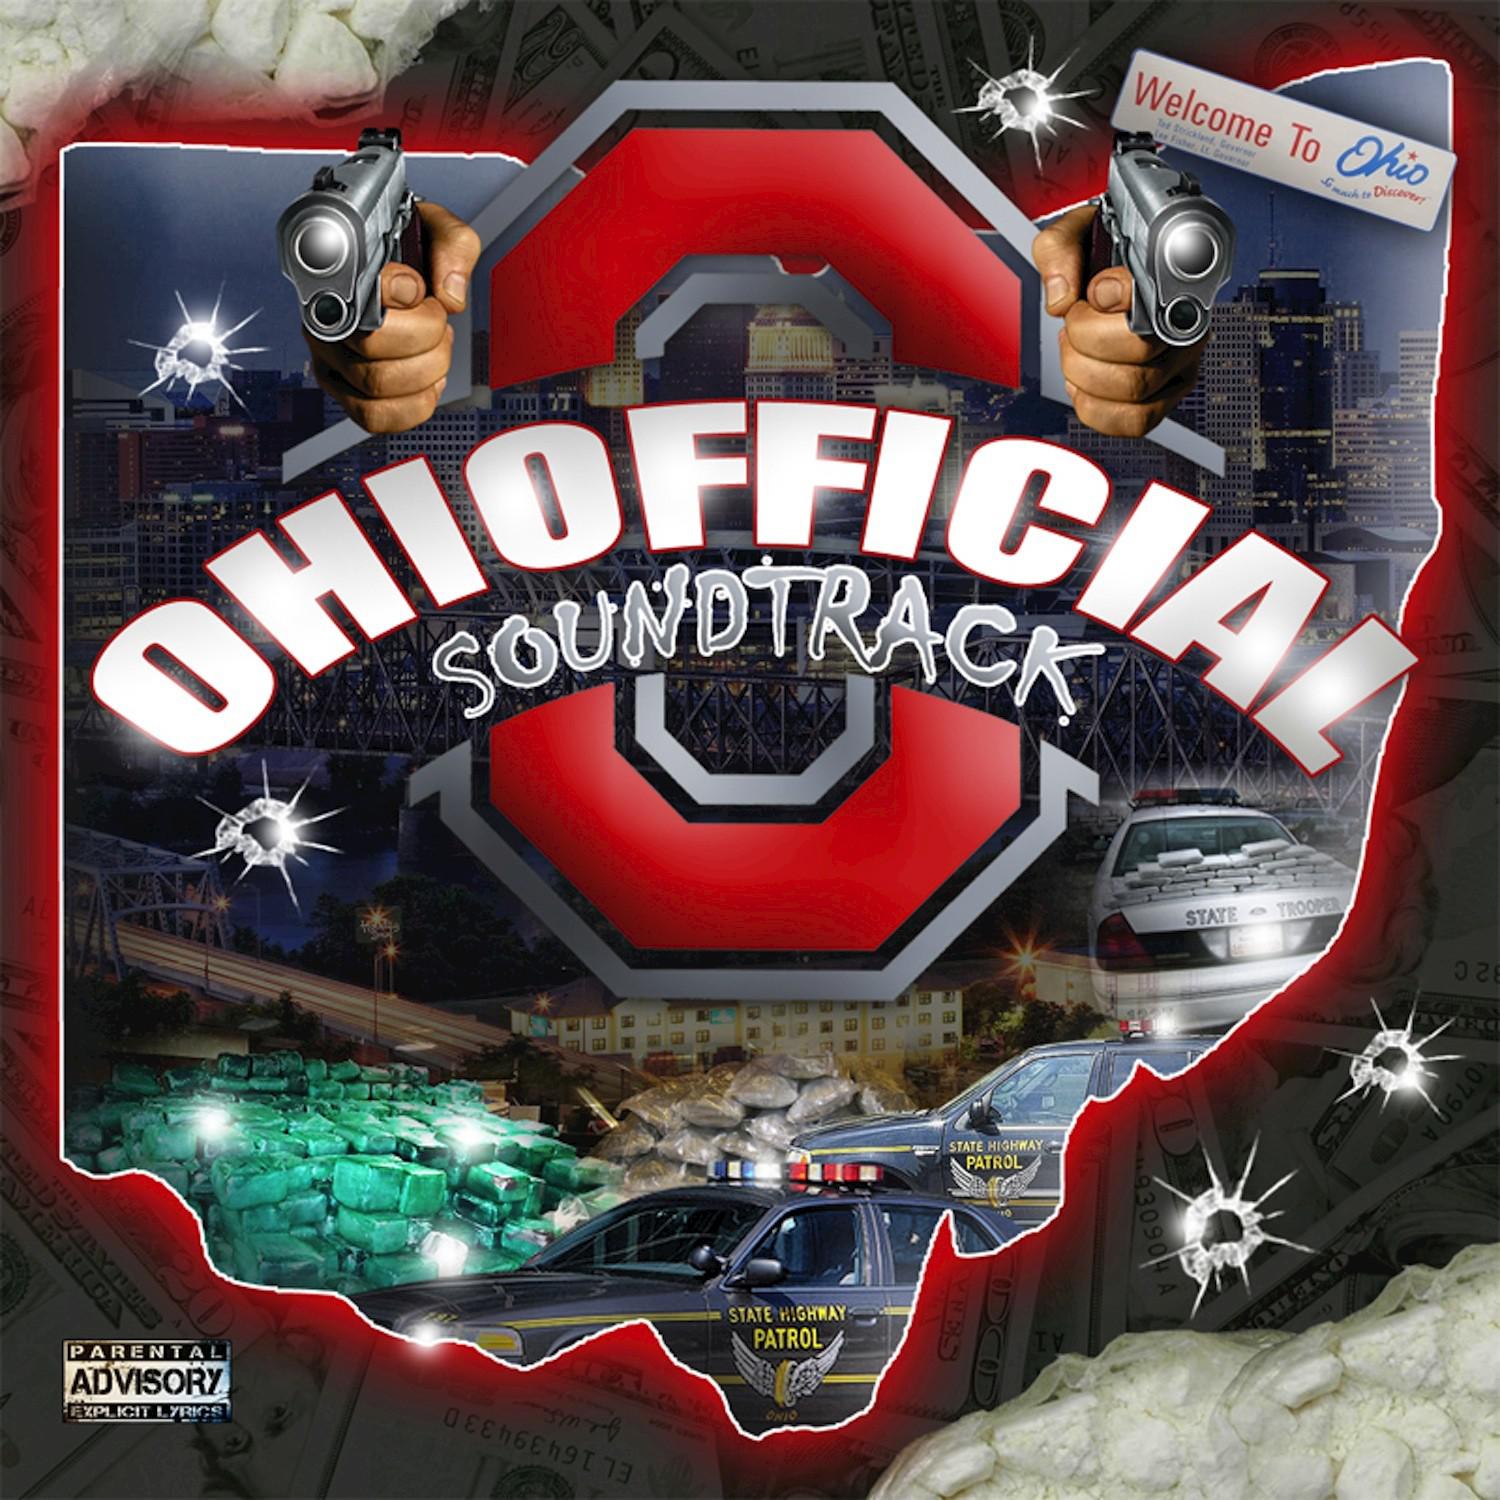 Ohiofficial Soundtrack